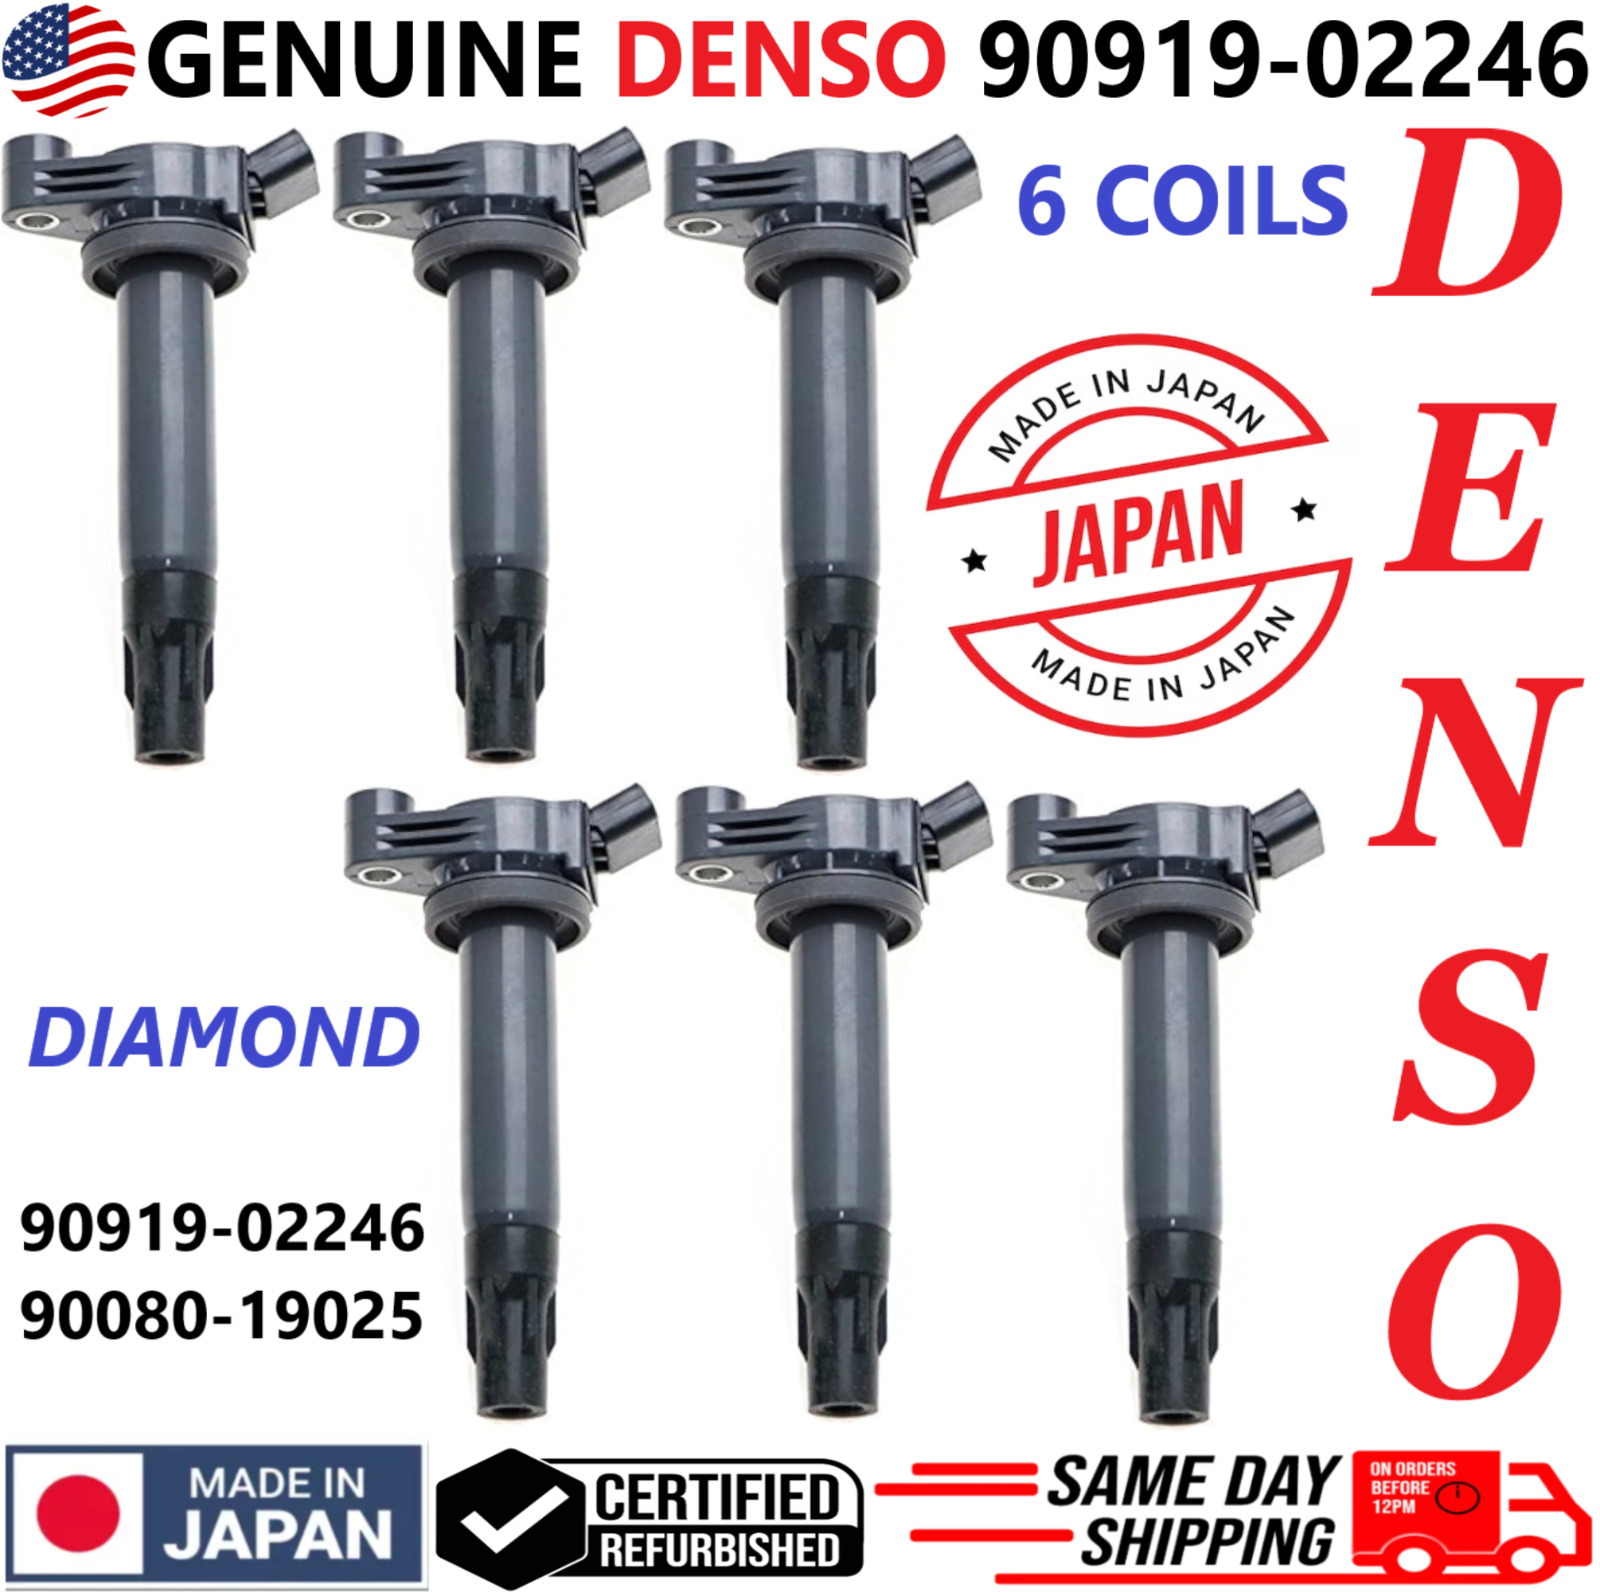 GENUINE DENSO x6 Ignition Coils For 2004-2010 Toyota & Lexus 3.3L V6 90919-02246